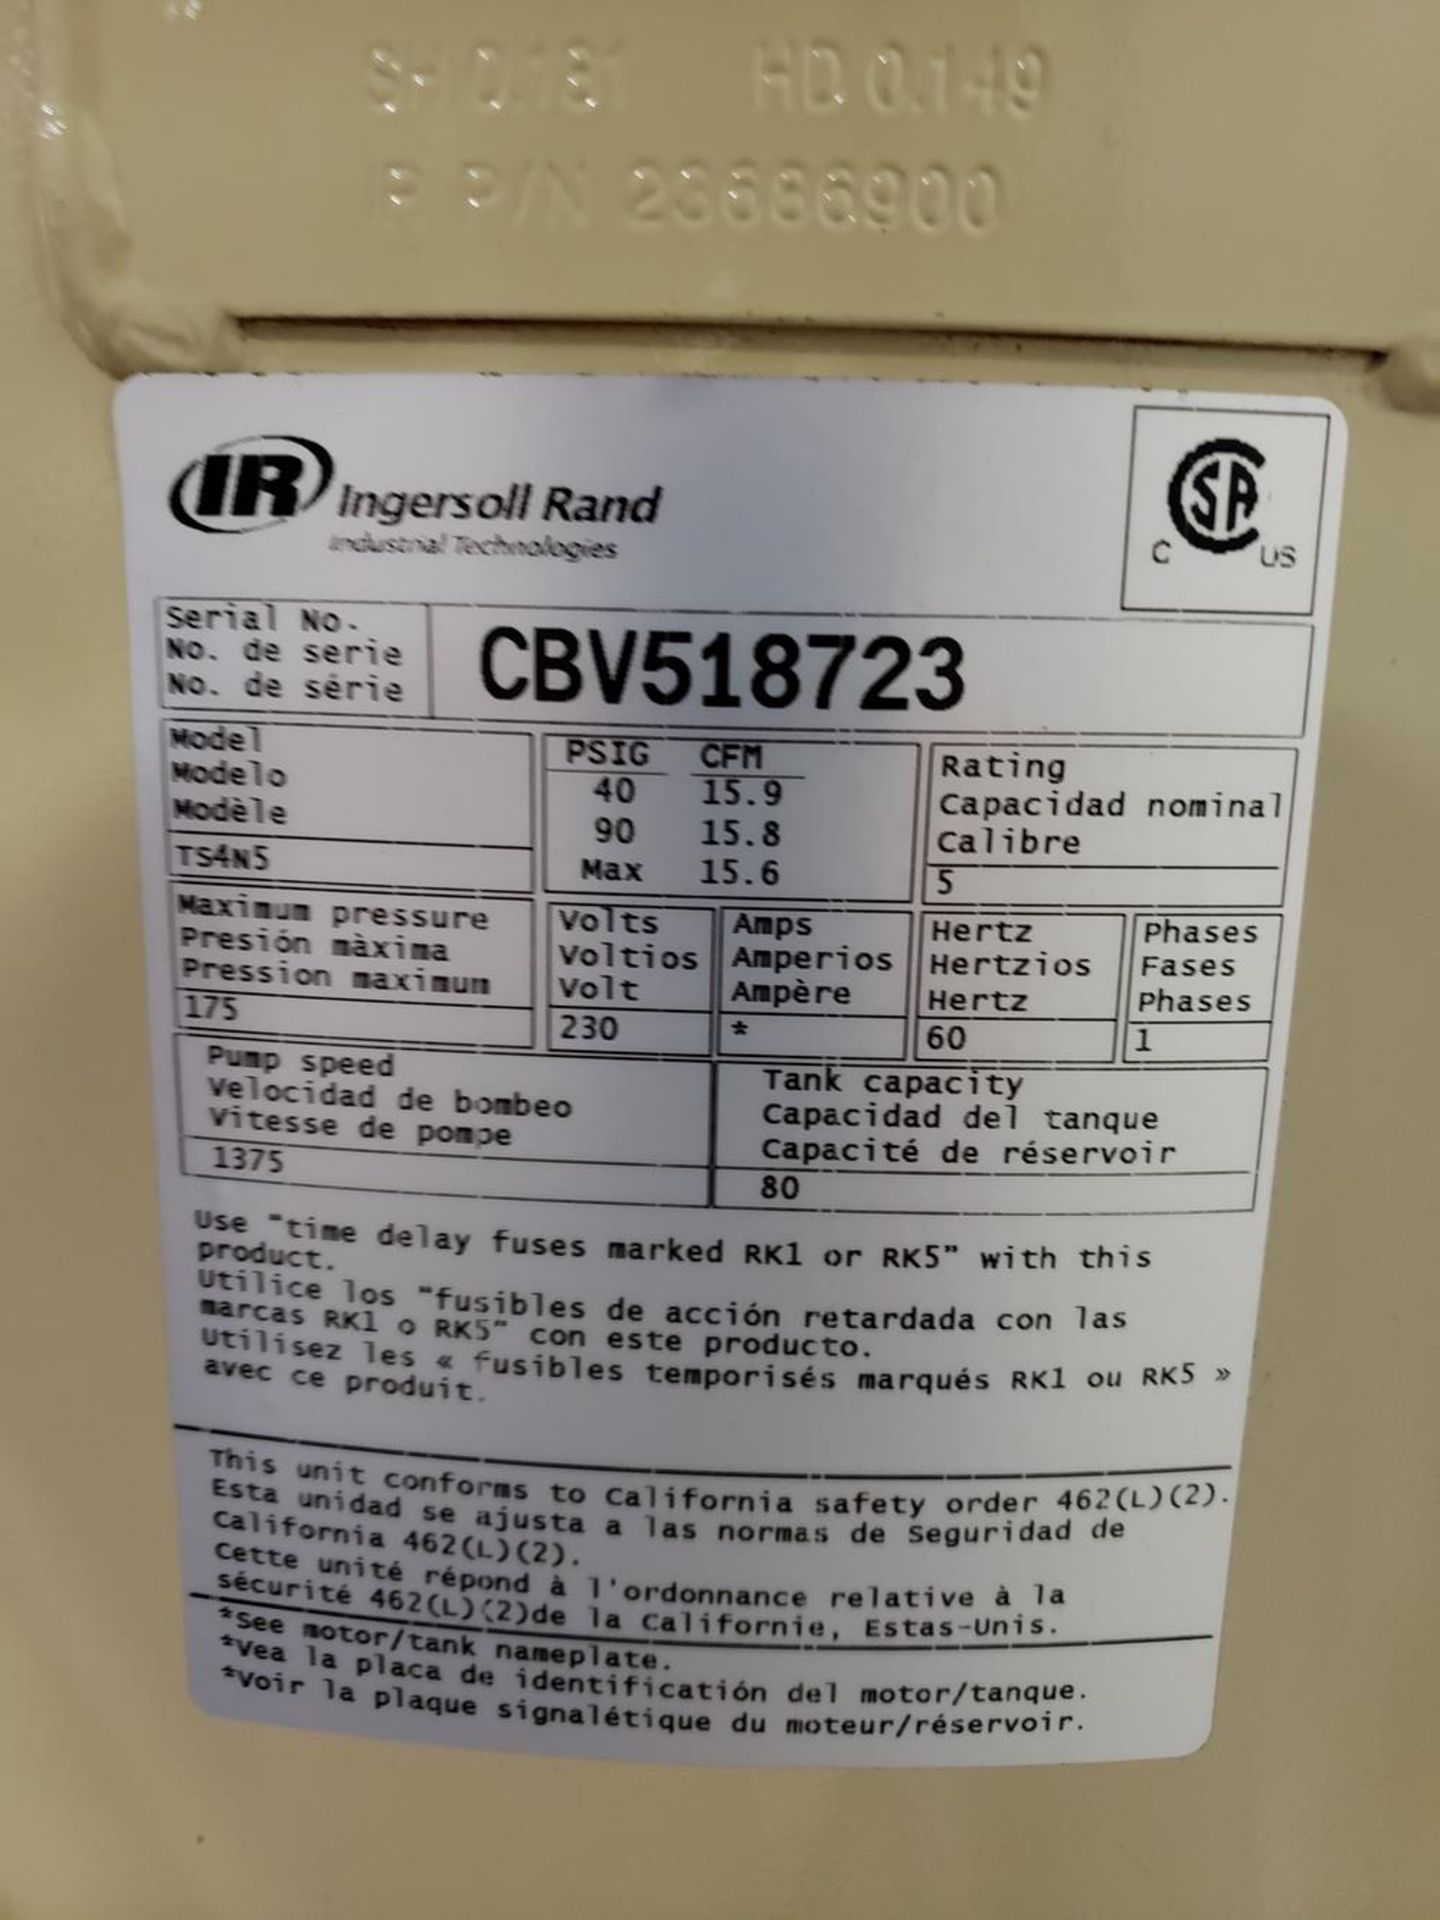 Ingersoll Rand Air Compressor, M# TS4n5, S/N CBV518723 | Rig Fee: $150 - Image 3 of 3